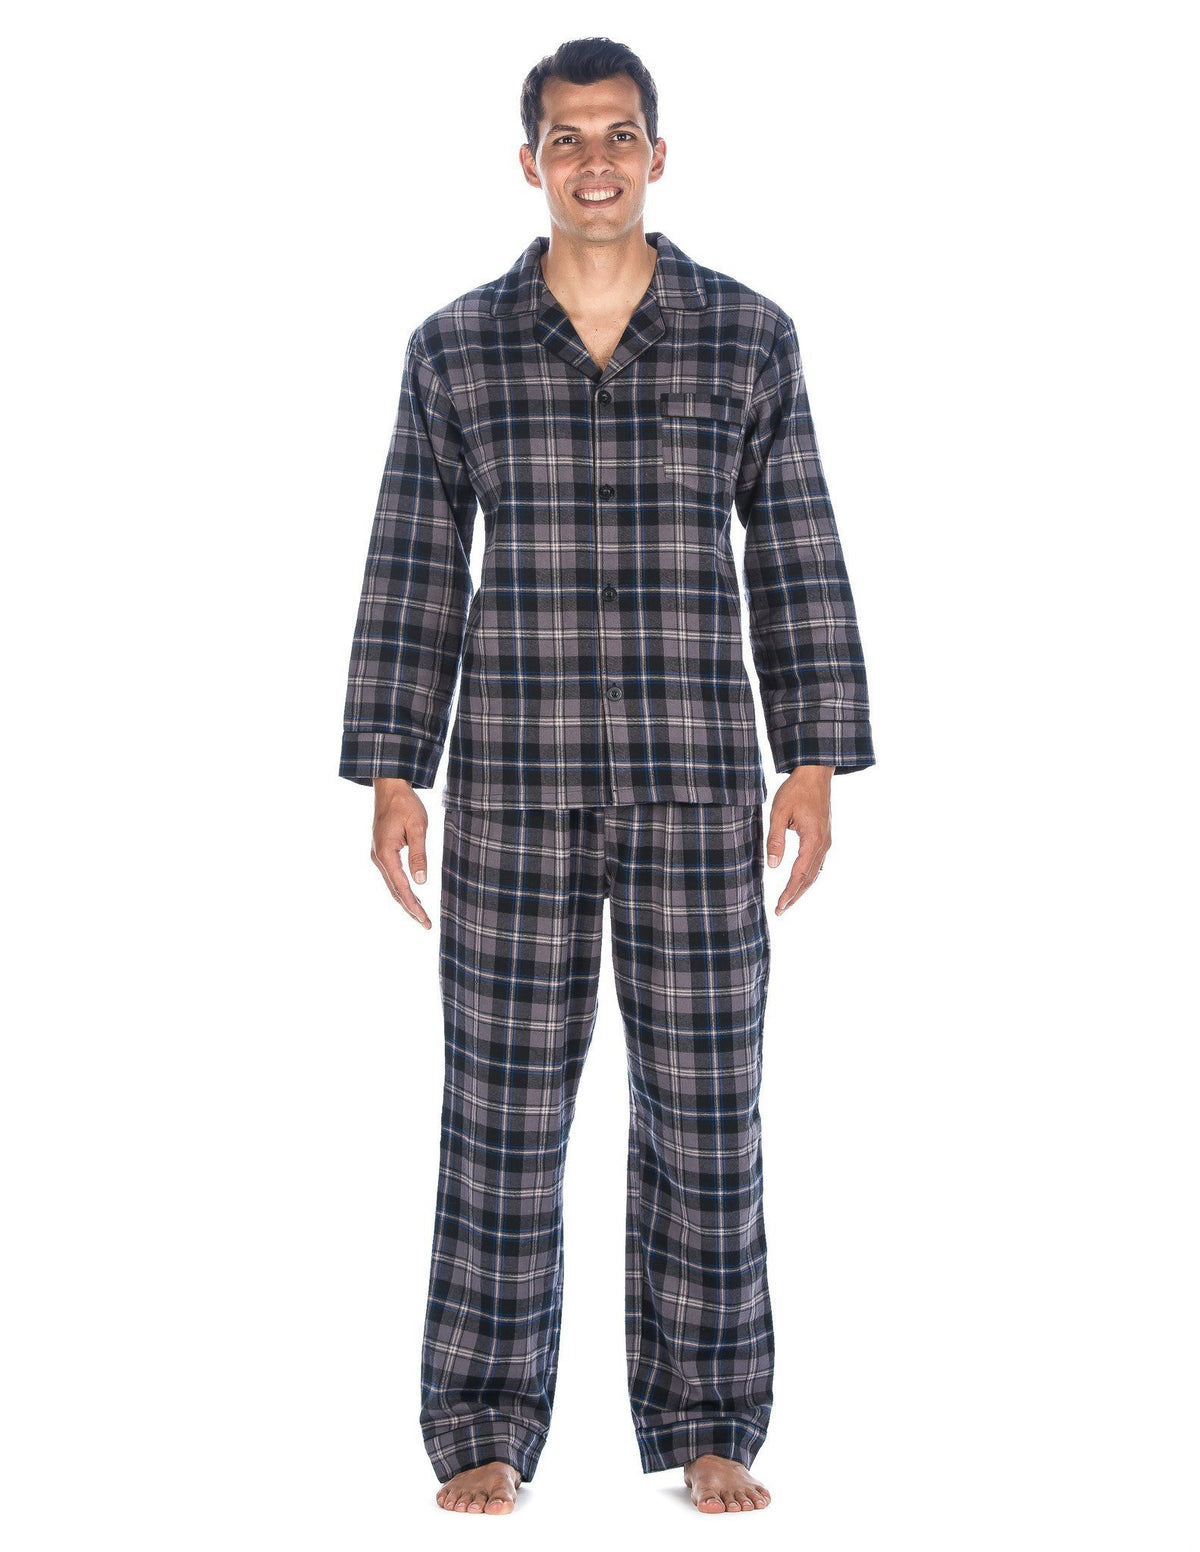 Relaxed Fit Men's Premium 100% Cotton Flannel Pajama Sleepwear Set - Black-Brown Tone Plaid